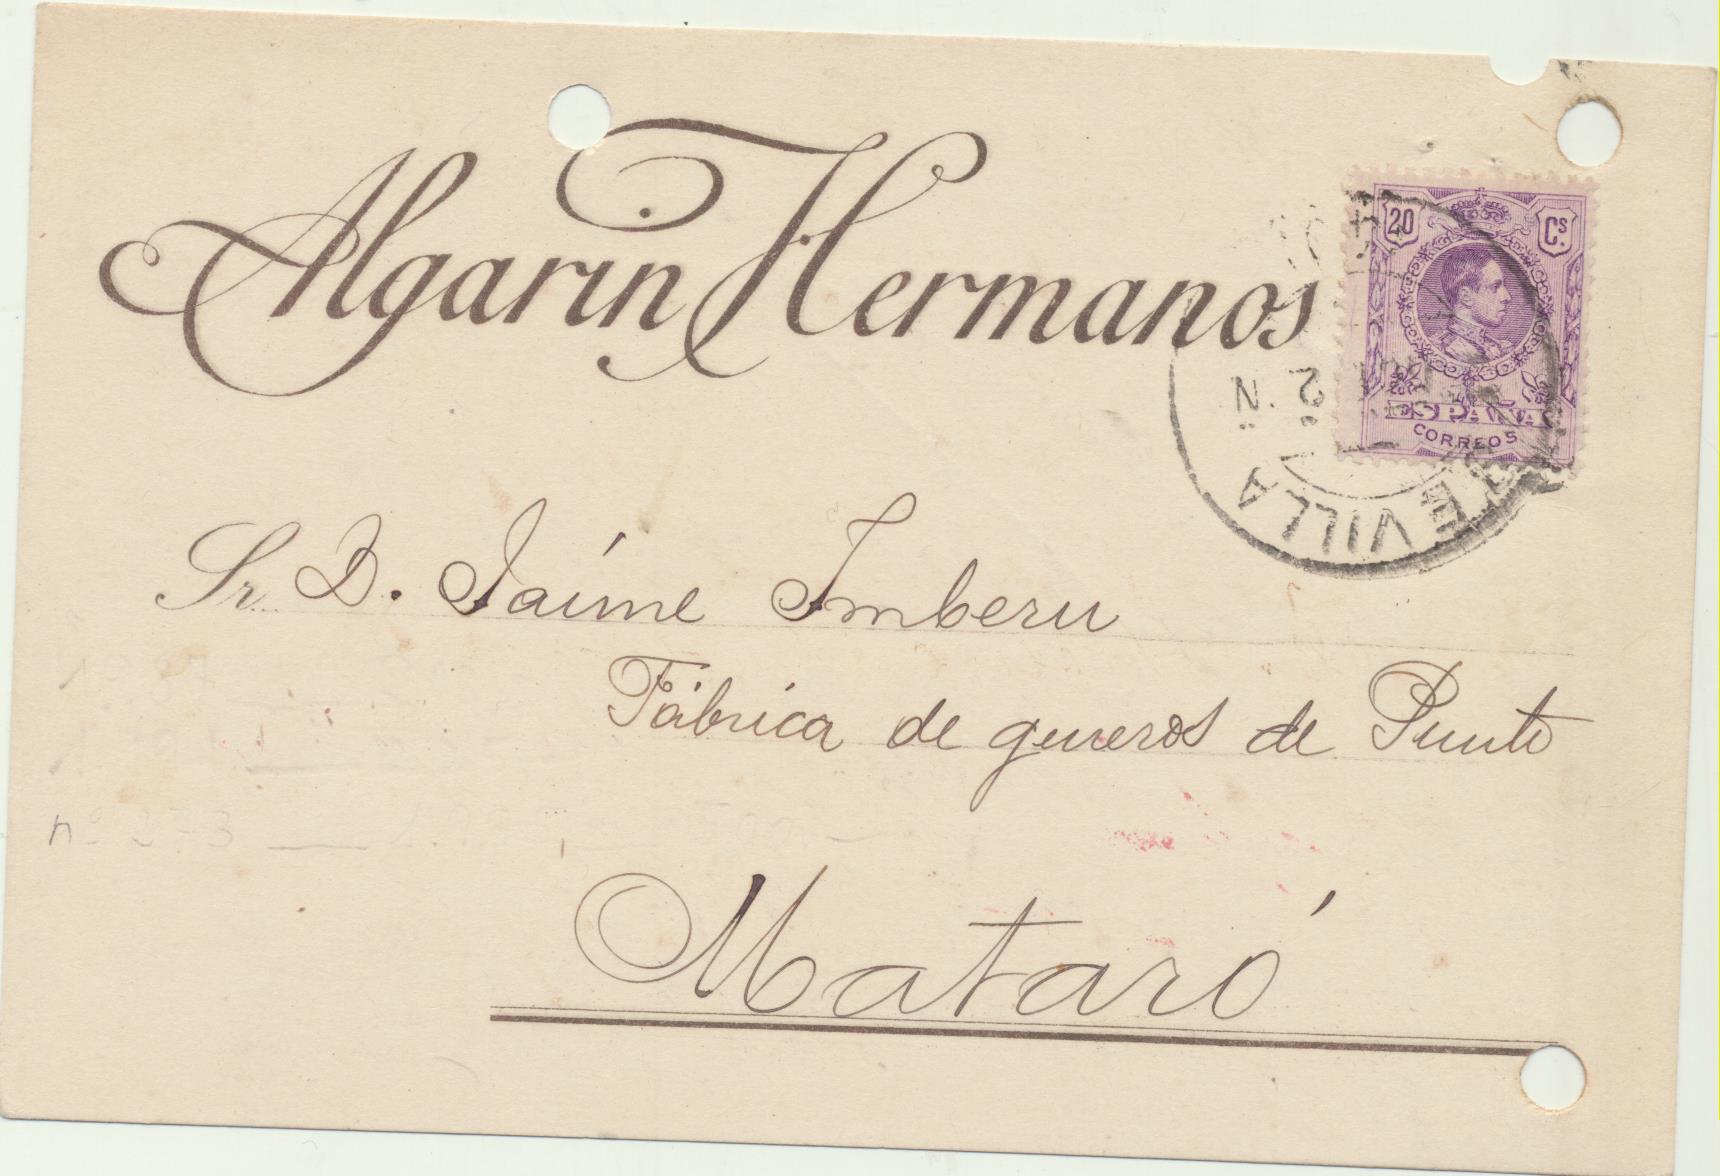 Tarjeta Postal con Membrete. Algarín Hermanos, Sevilla. De Sevilla a Mataró del 10-11-1922